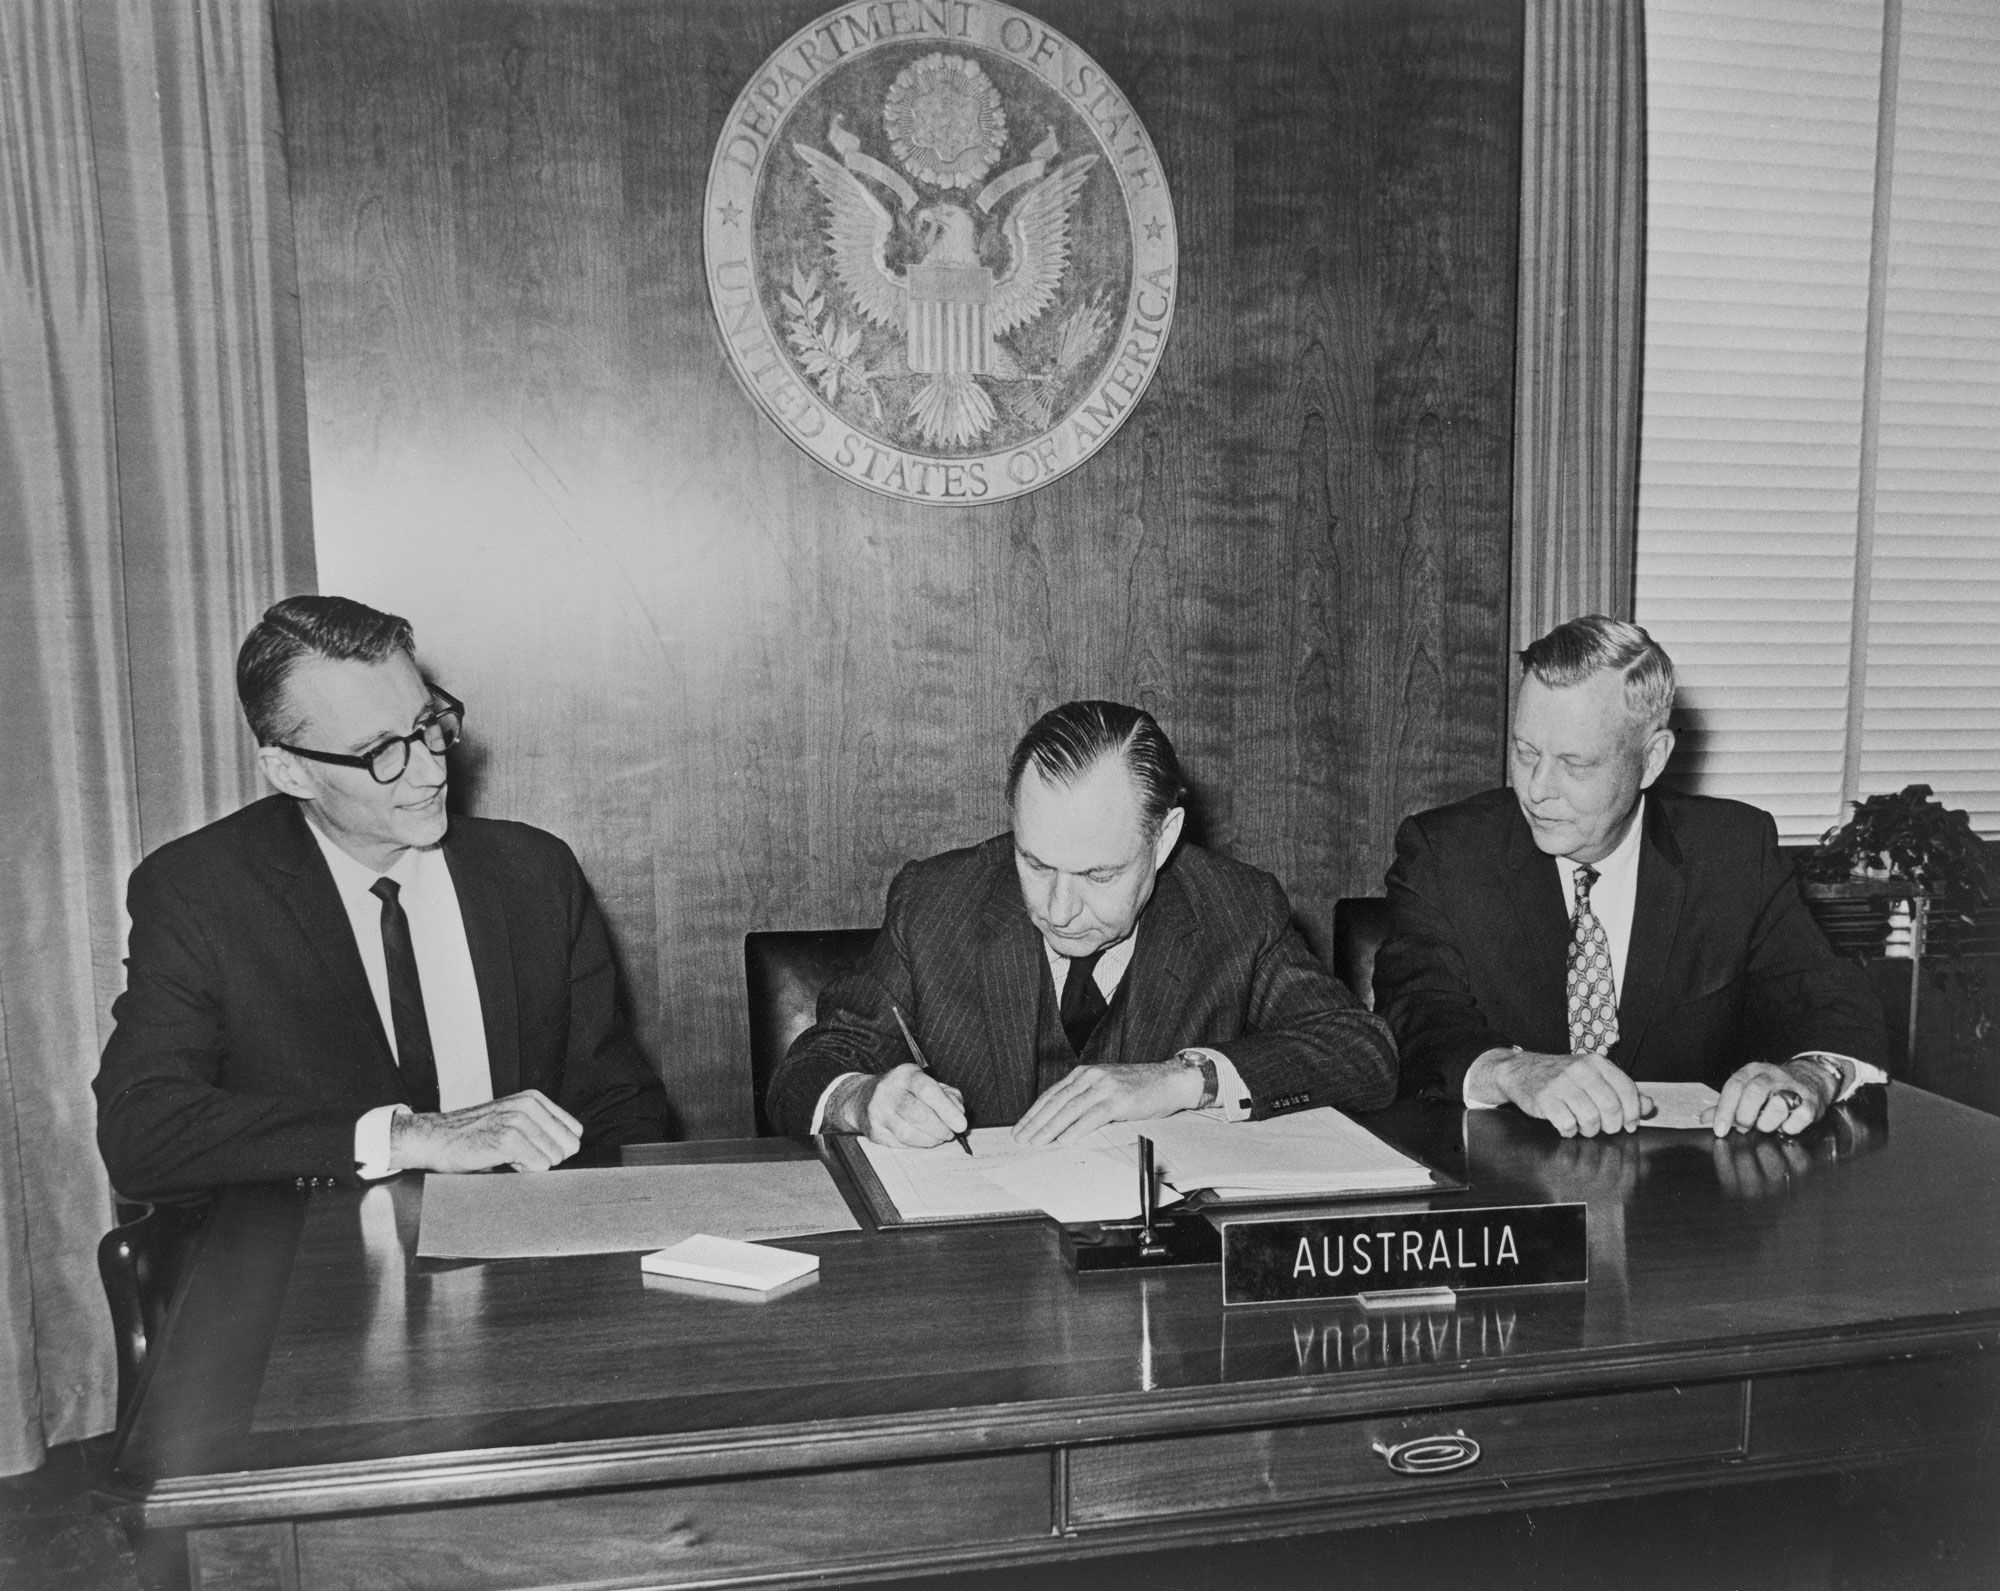 Australia signs the Nuclear Non-Proliferation Treaty, 27 February 1970.